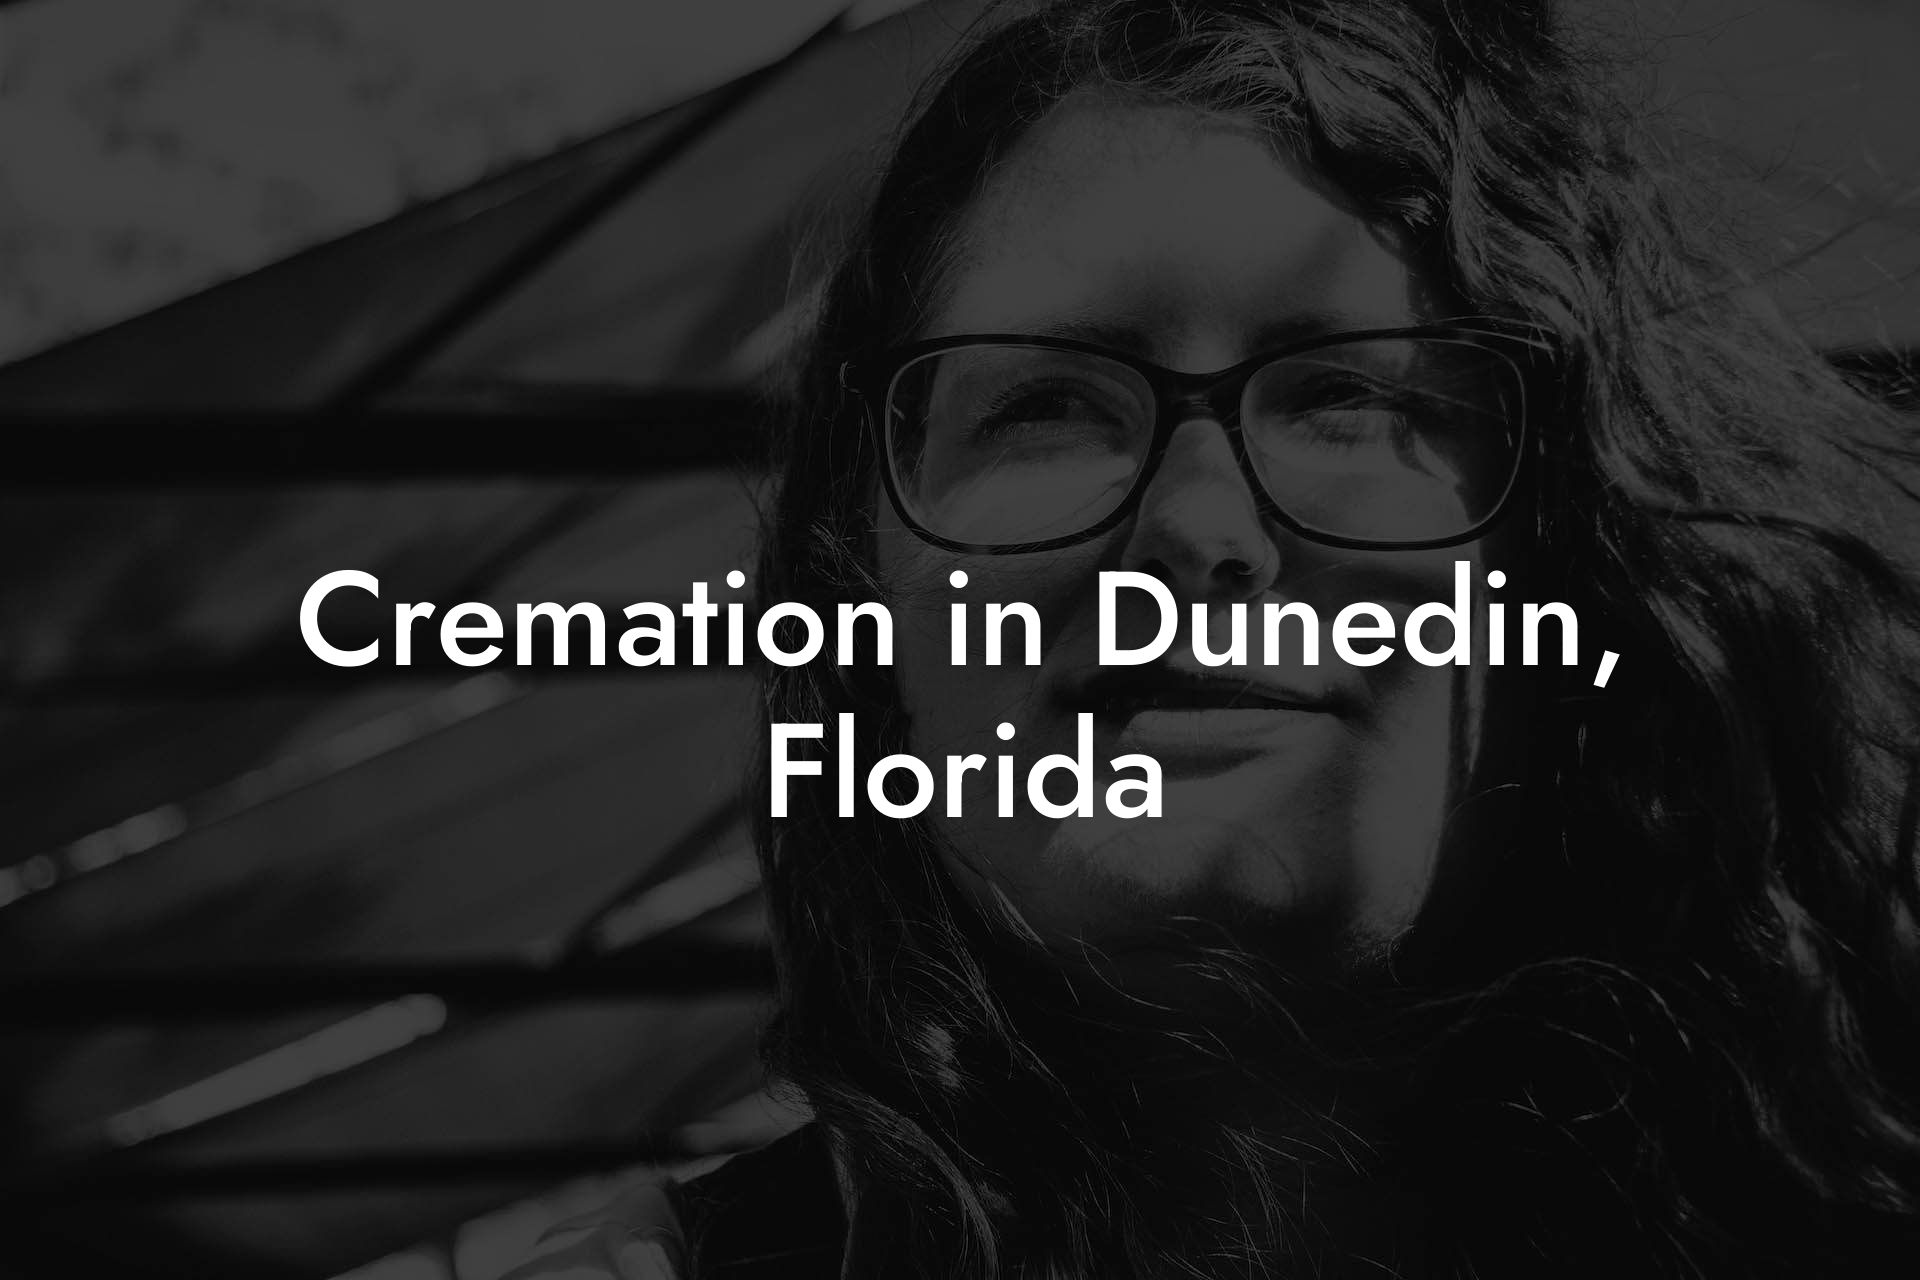 Cremation in Dunedin, Florida